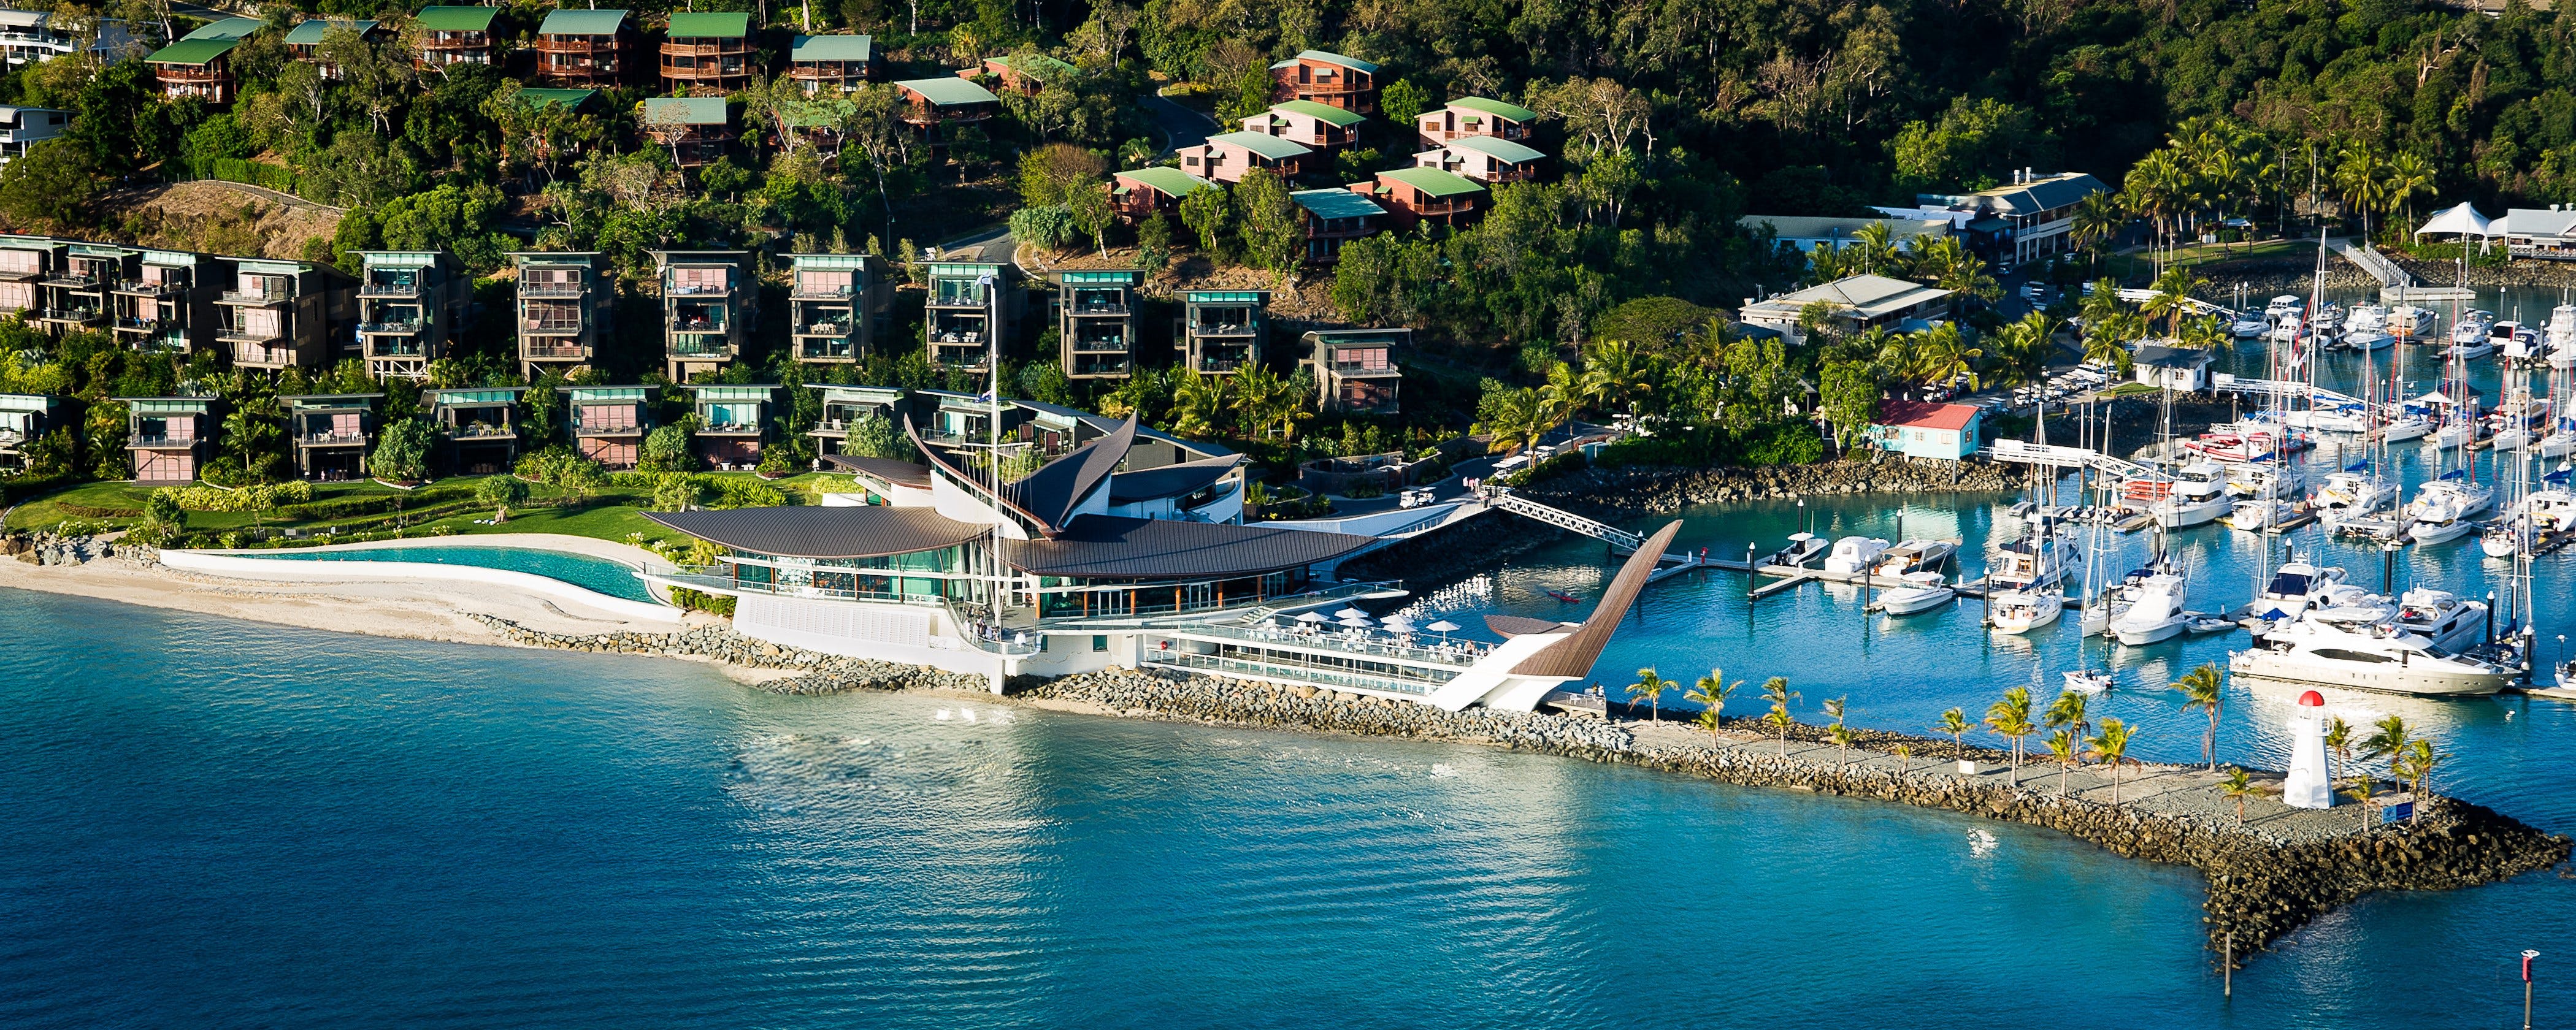 Hamilton Island Yacht Club - Accommodation Nelson Bay